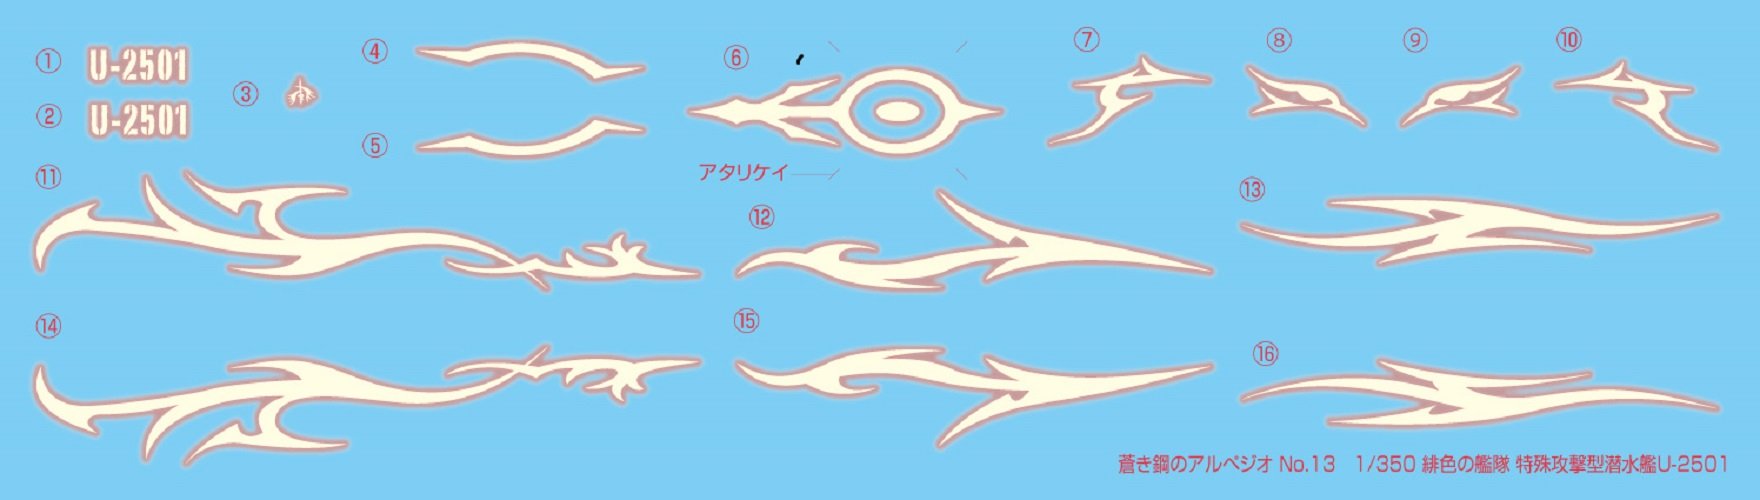 Aoshima Bunka Kyozaisha Arpeggio aus blauem Stahl -Ars Nova- No.10 Special Attack Submarine U-2501 Kunststoffmodell im Maßstab 1:700